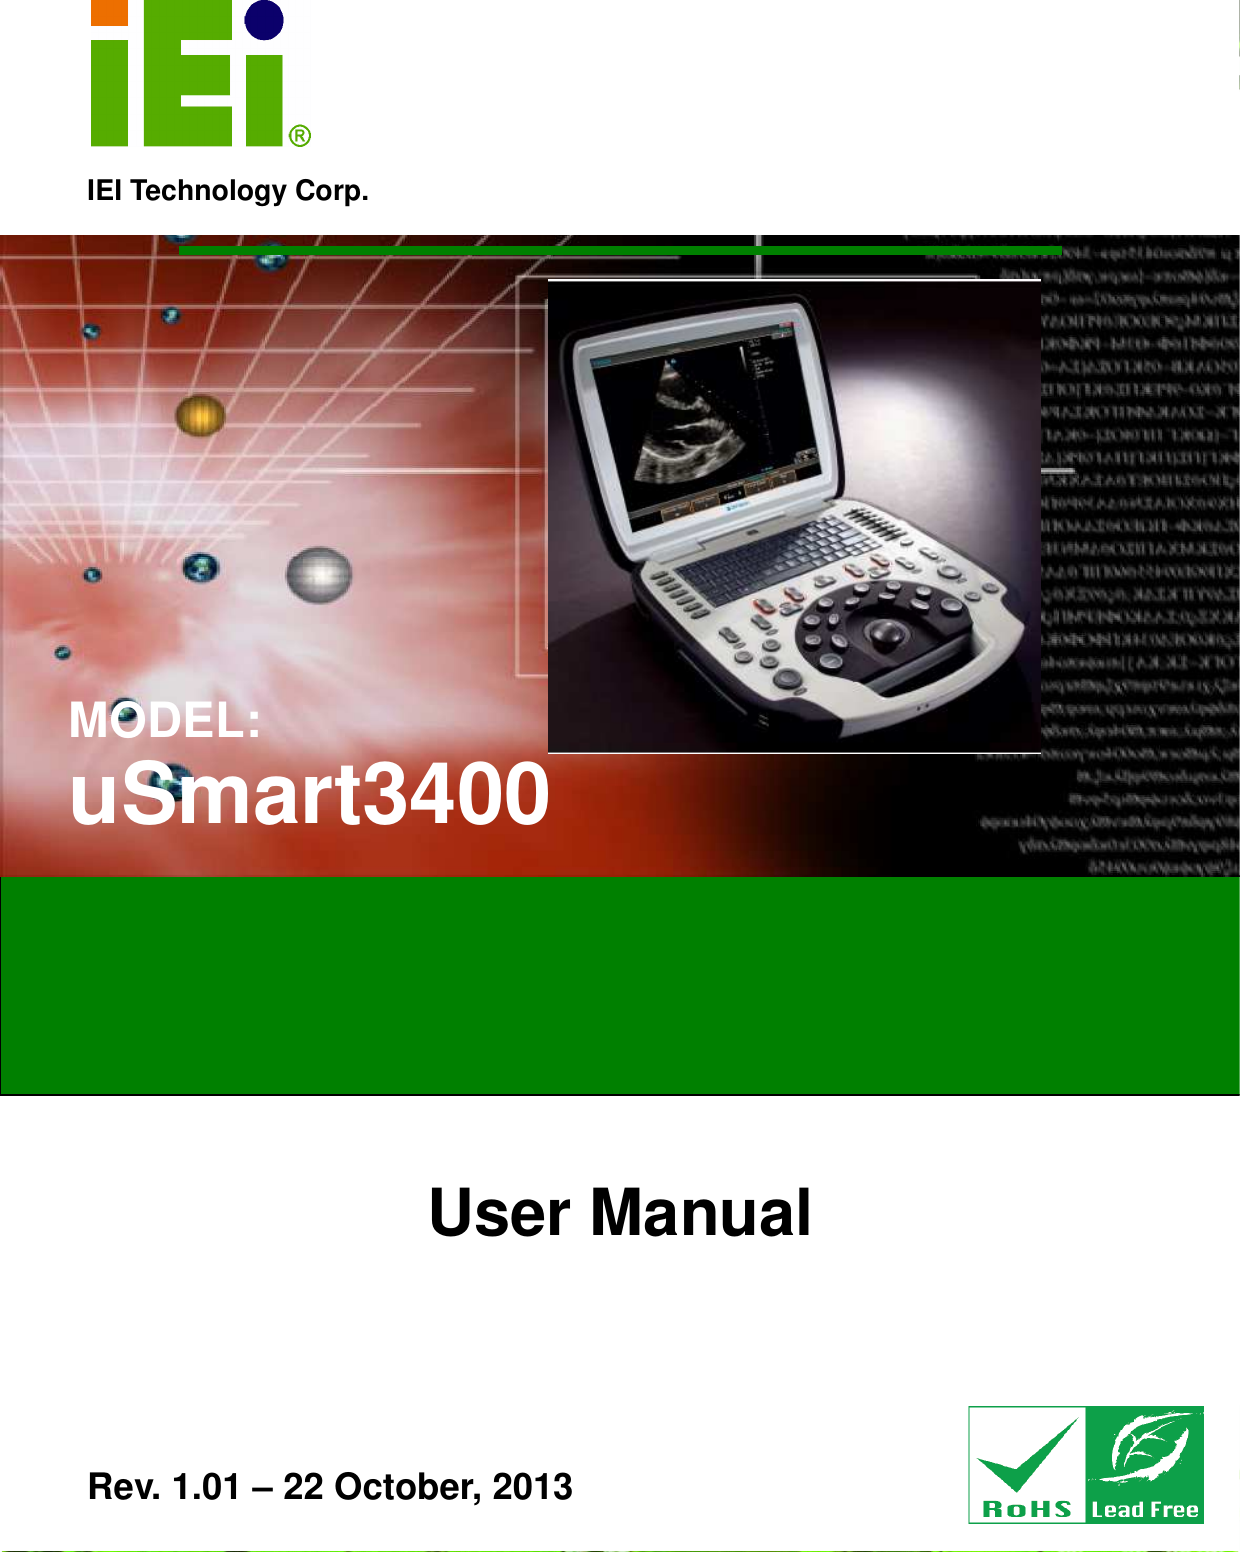   uSmart3400 Page 1 IEI Technology Corp. User Manual Panel PC  MODEL: uSmart3400 Rev. 1.01 – 22 October, 2013 